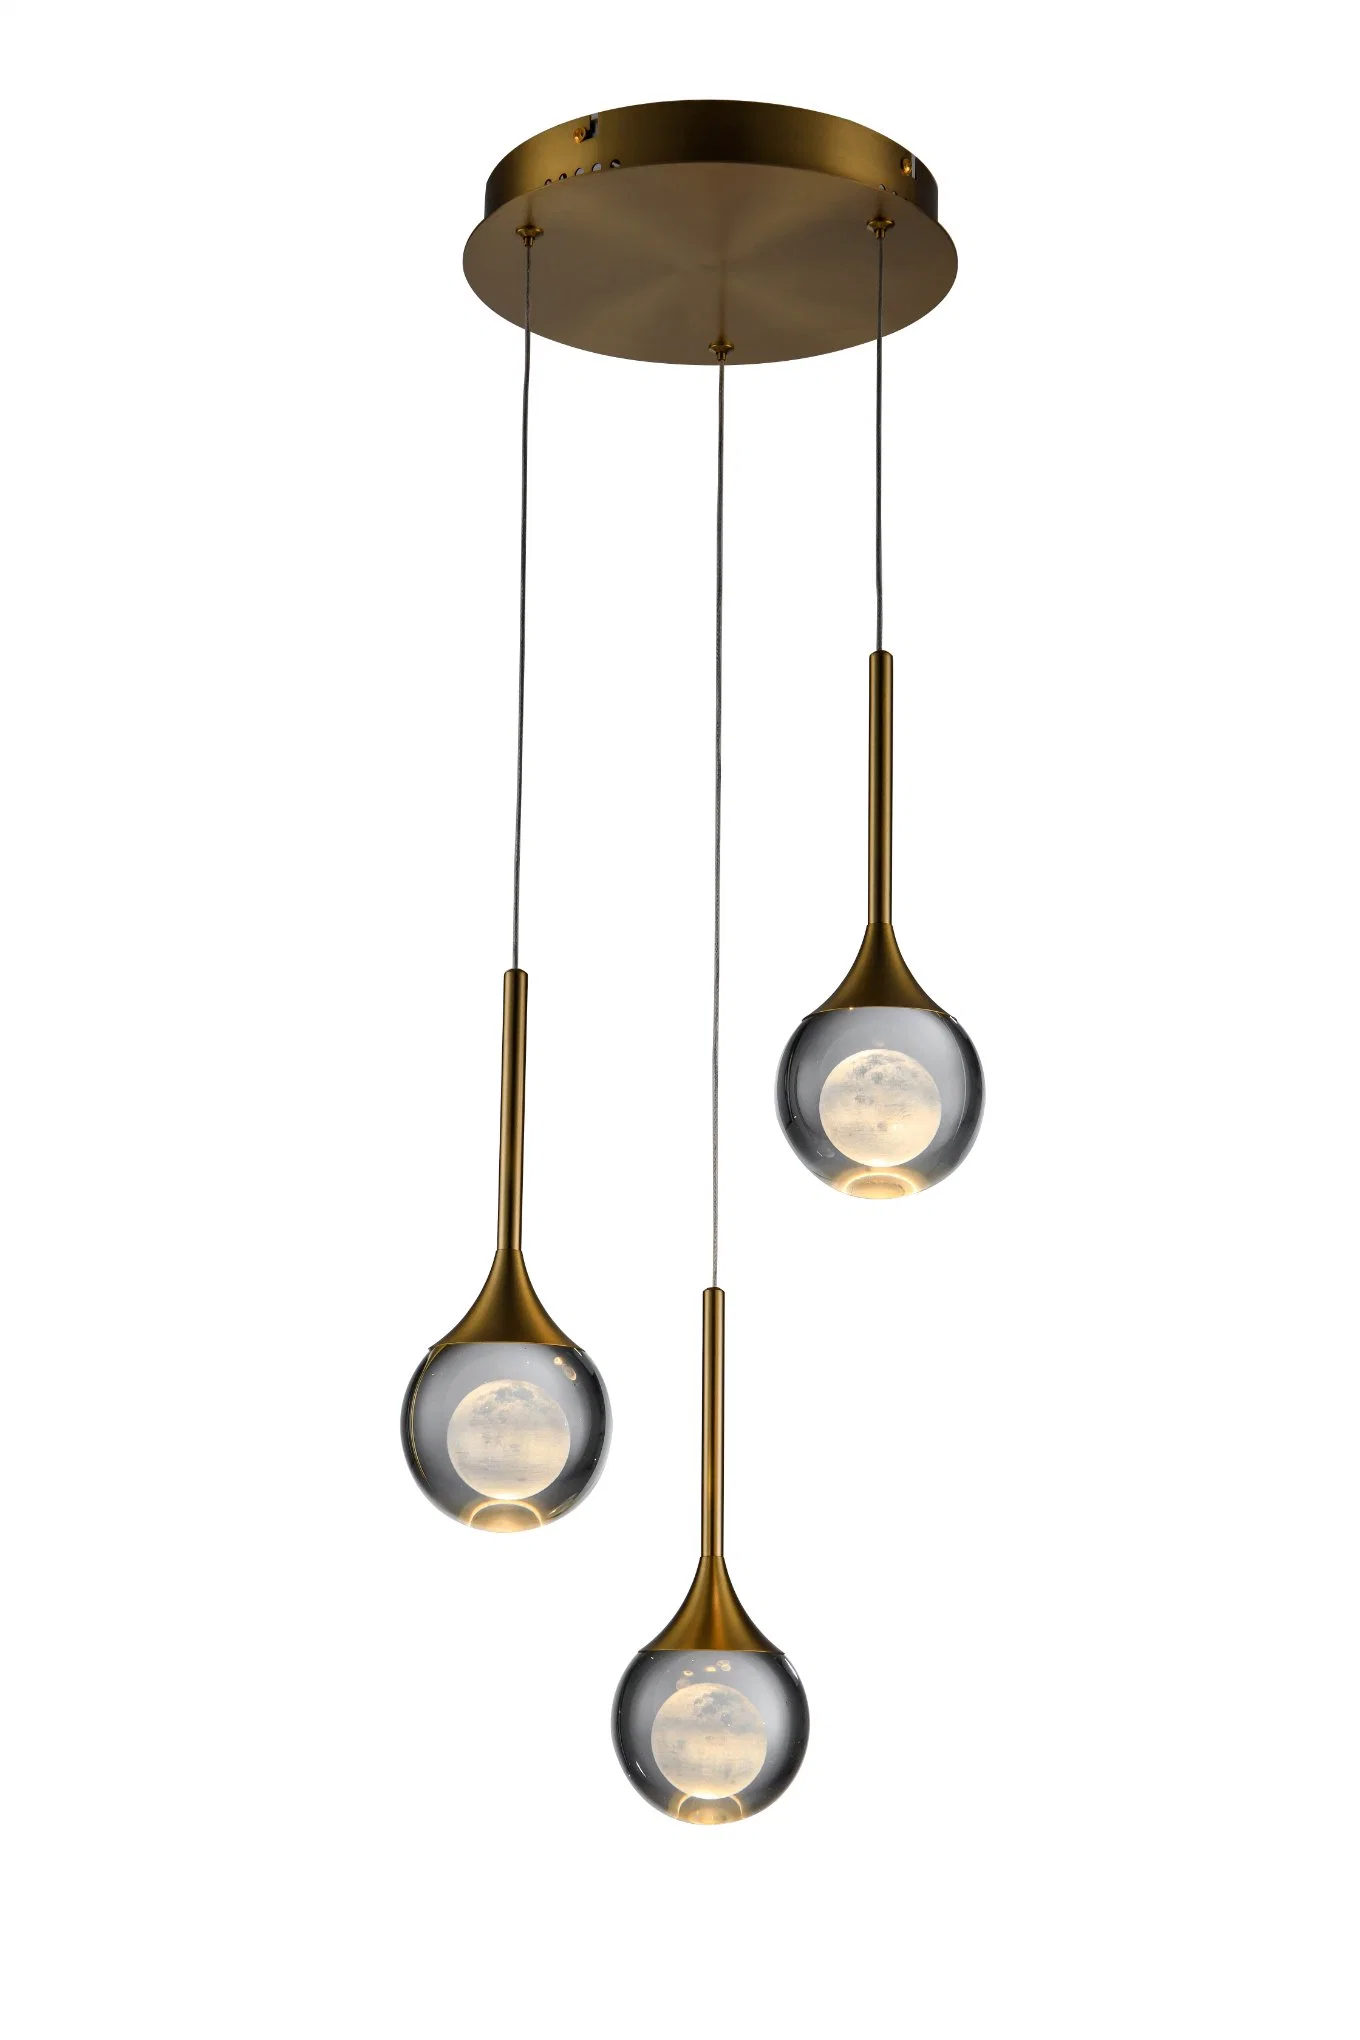 Iluminação moderna fábrica Masivel Luxury lustre de cristal LED de luz da lâmpada Pendente